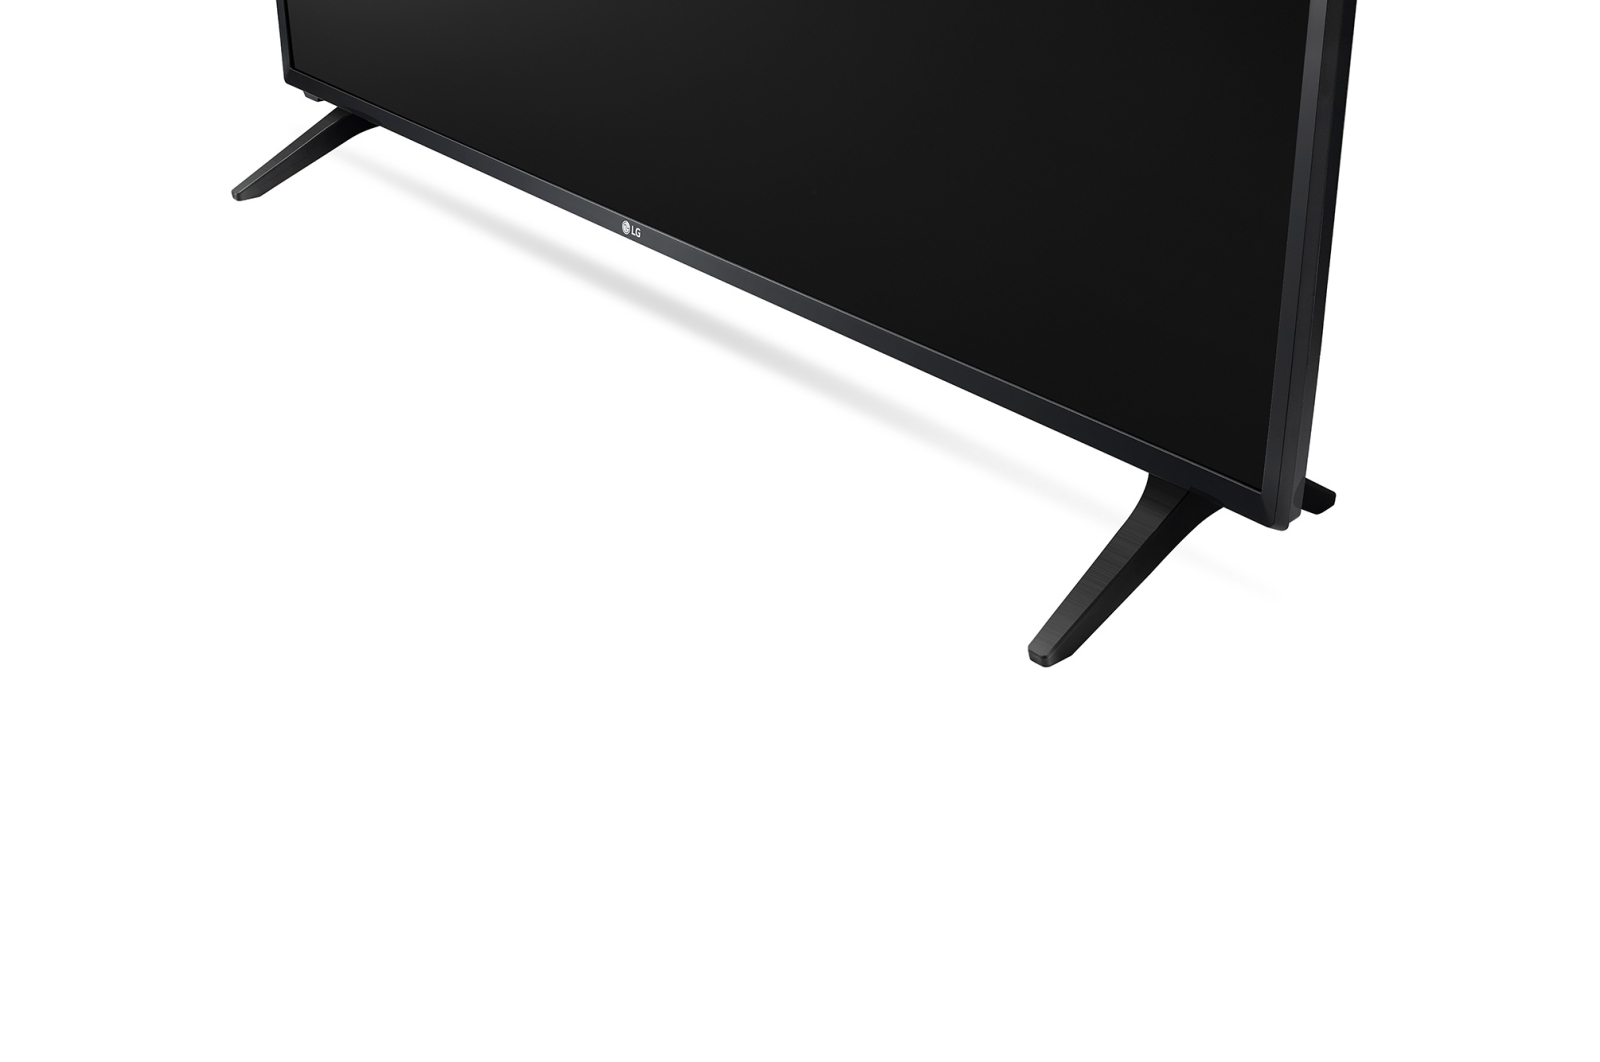 LG 43" Full HD LED Digital TV - 43LK5000